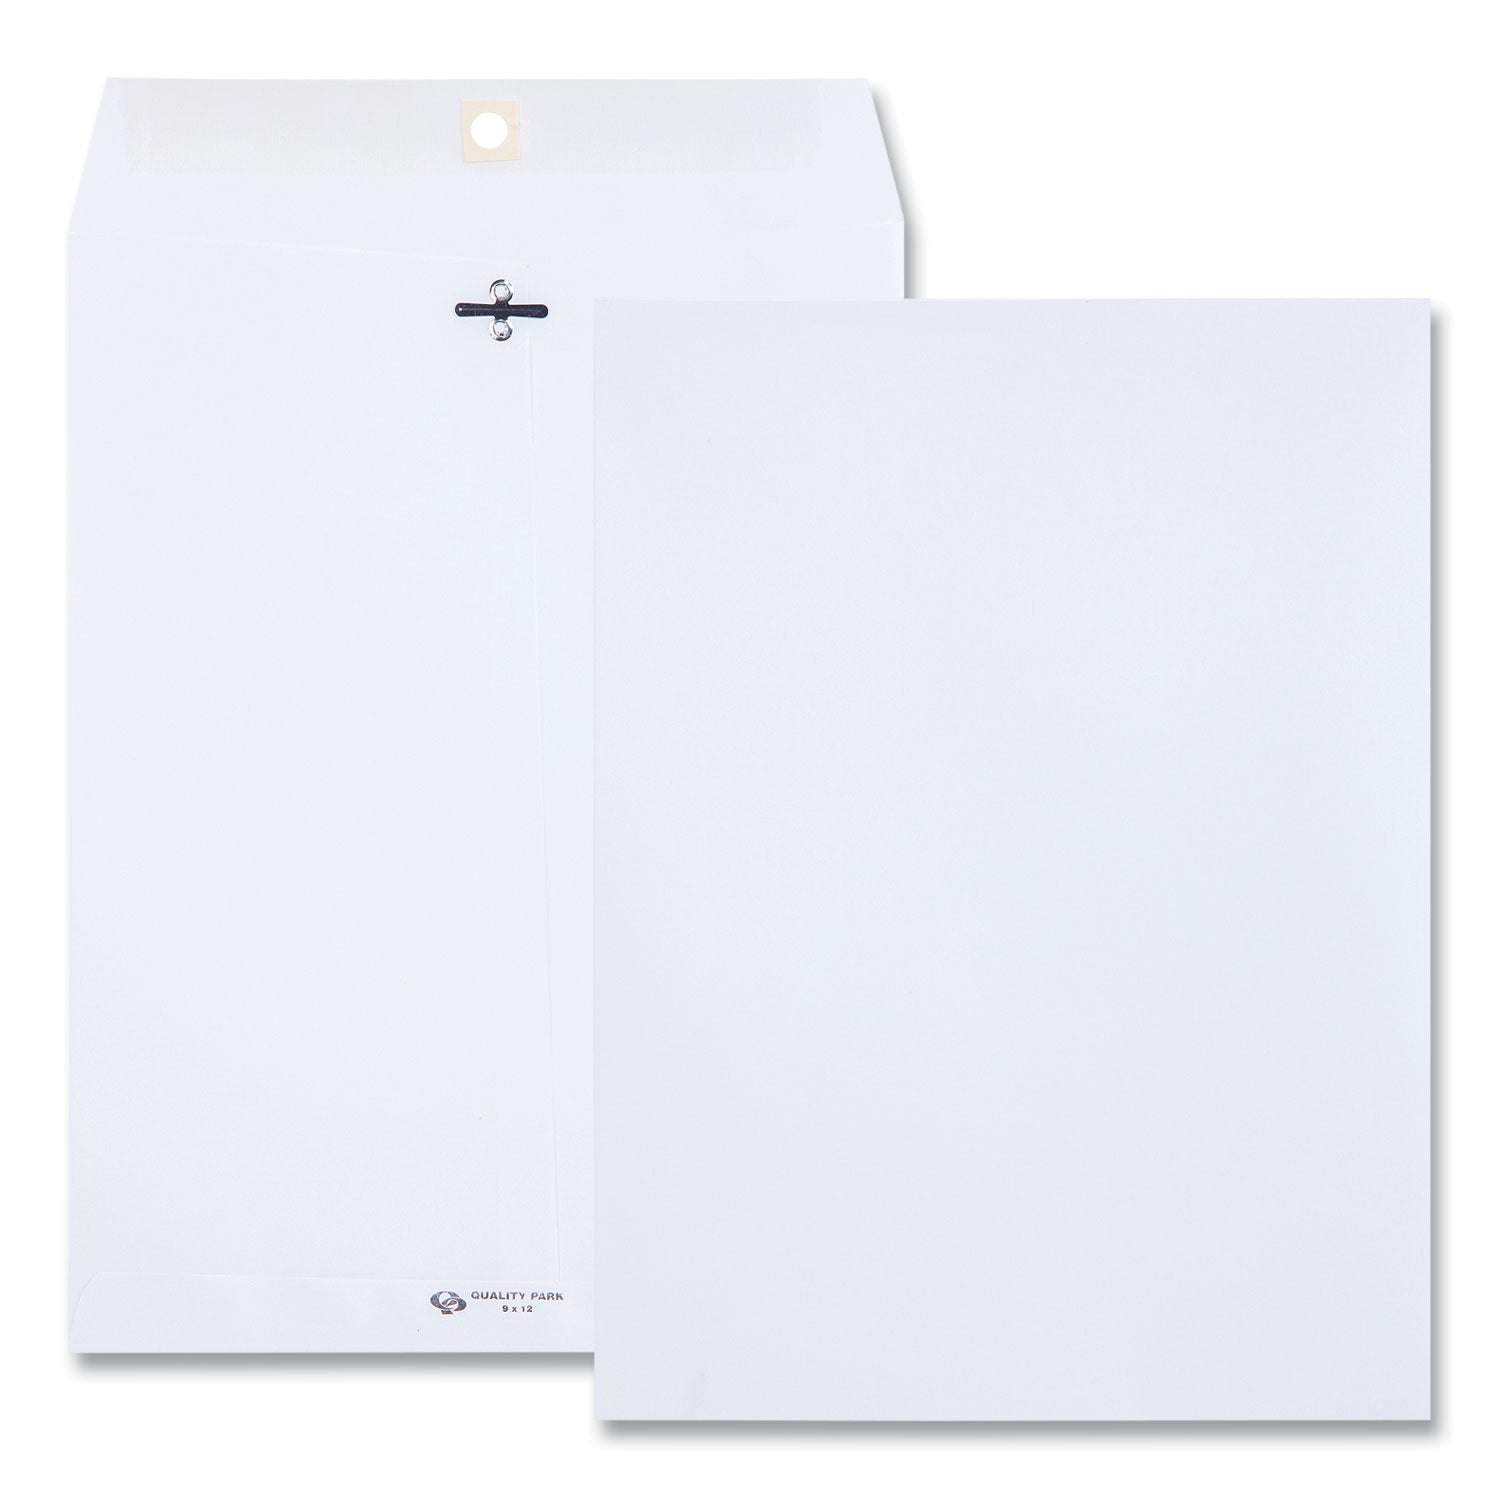 Clasp Envelope, 28 lb Bond Weight Paper, #90, Square Flap, Clasp/Gummed Closure, 9 x 12, White, 100/Box - 